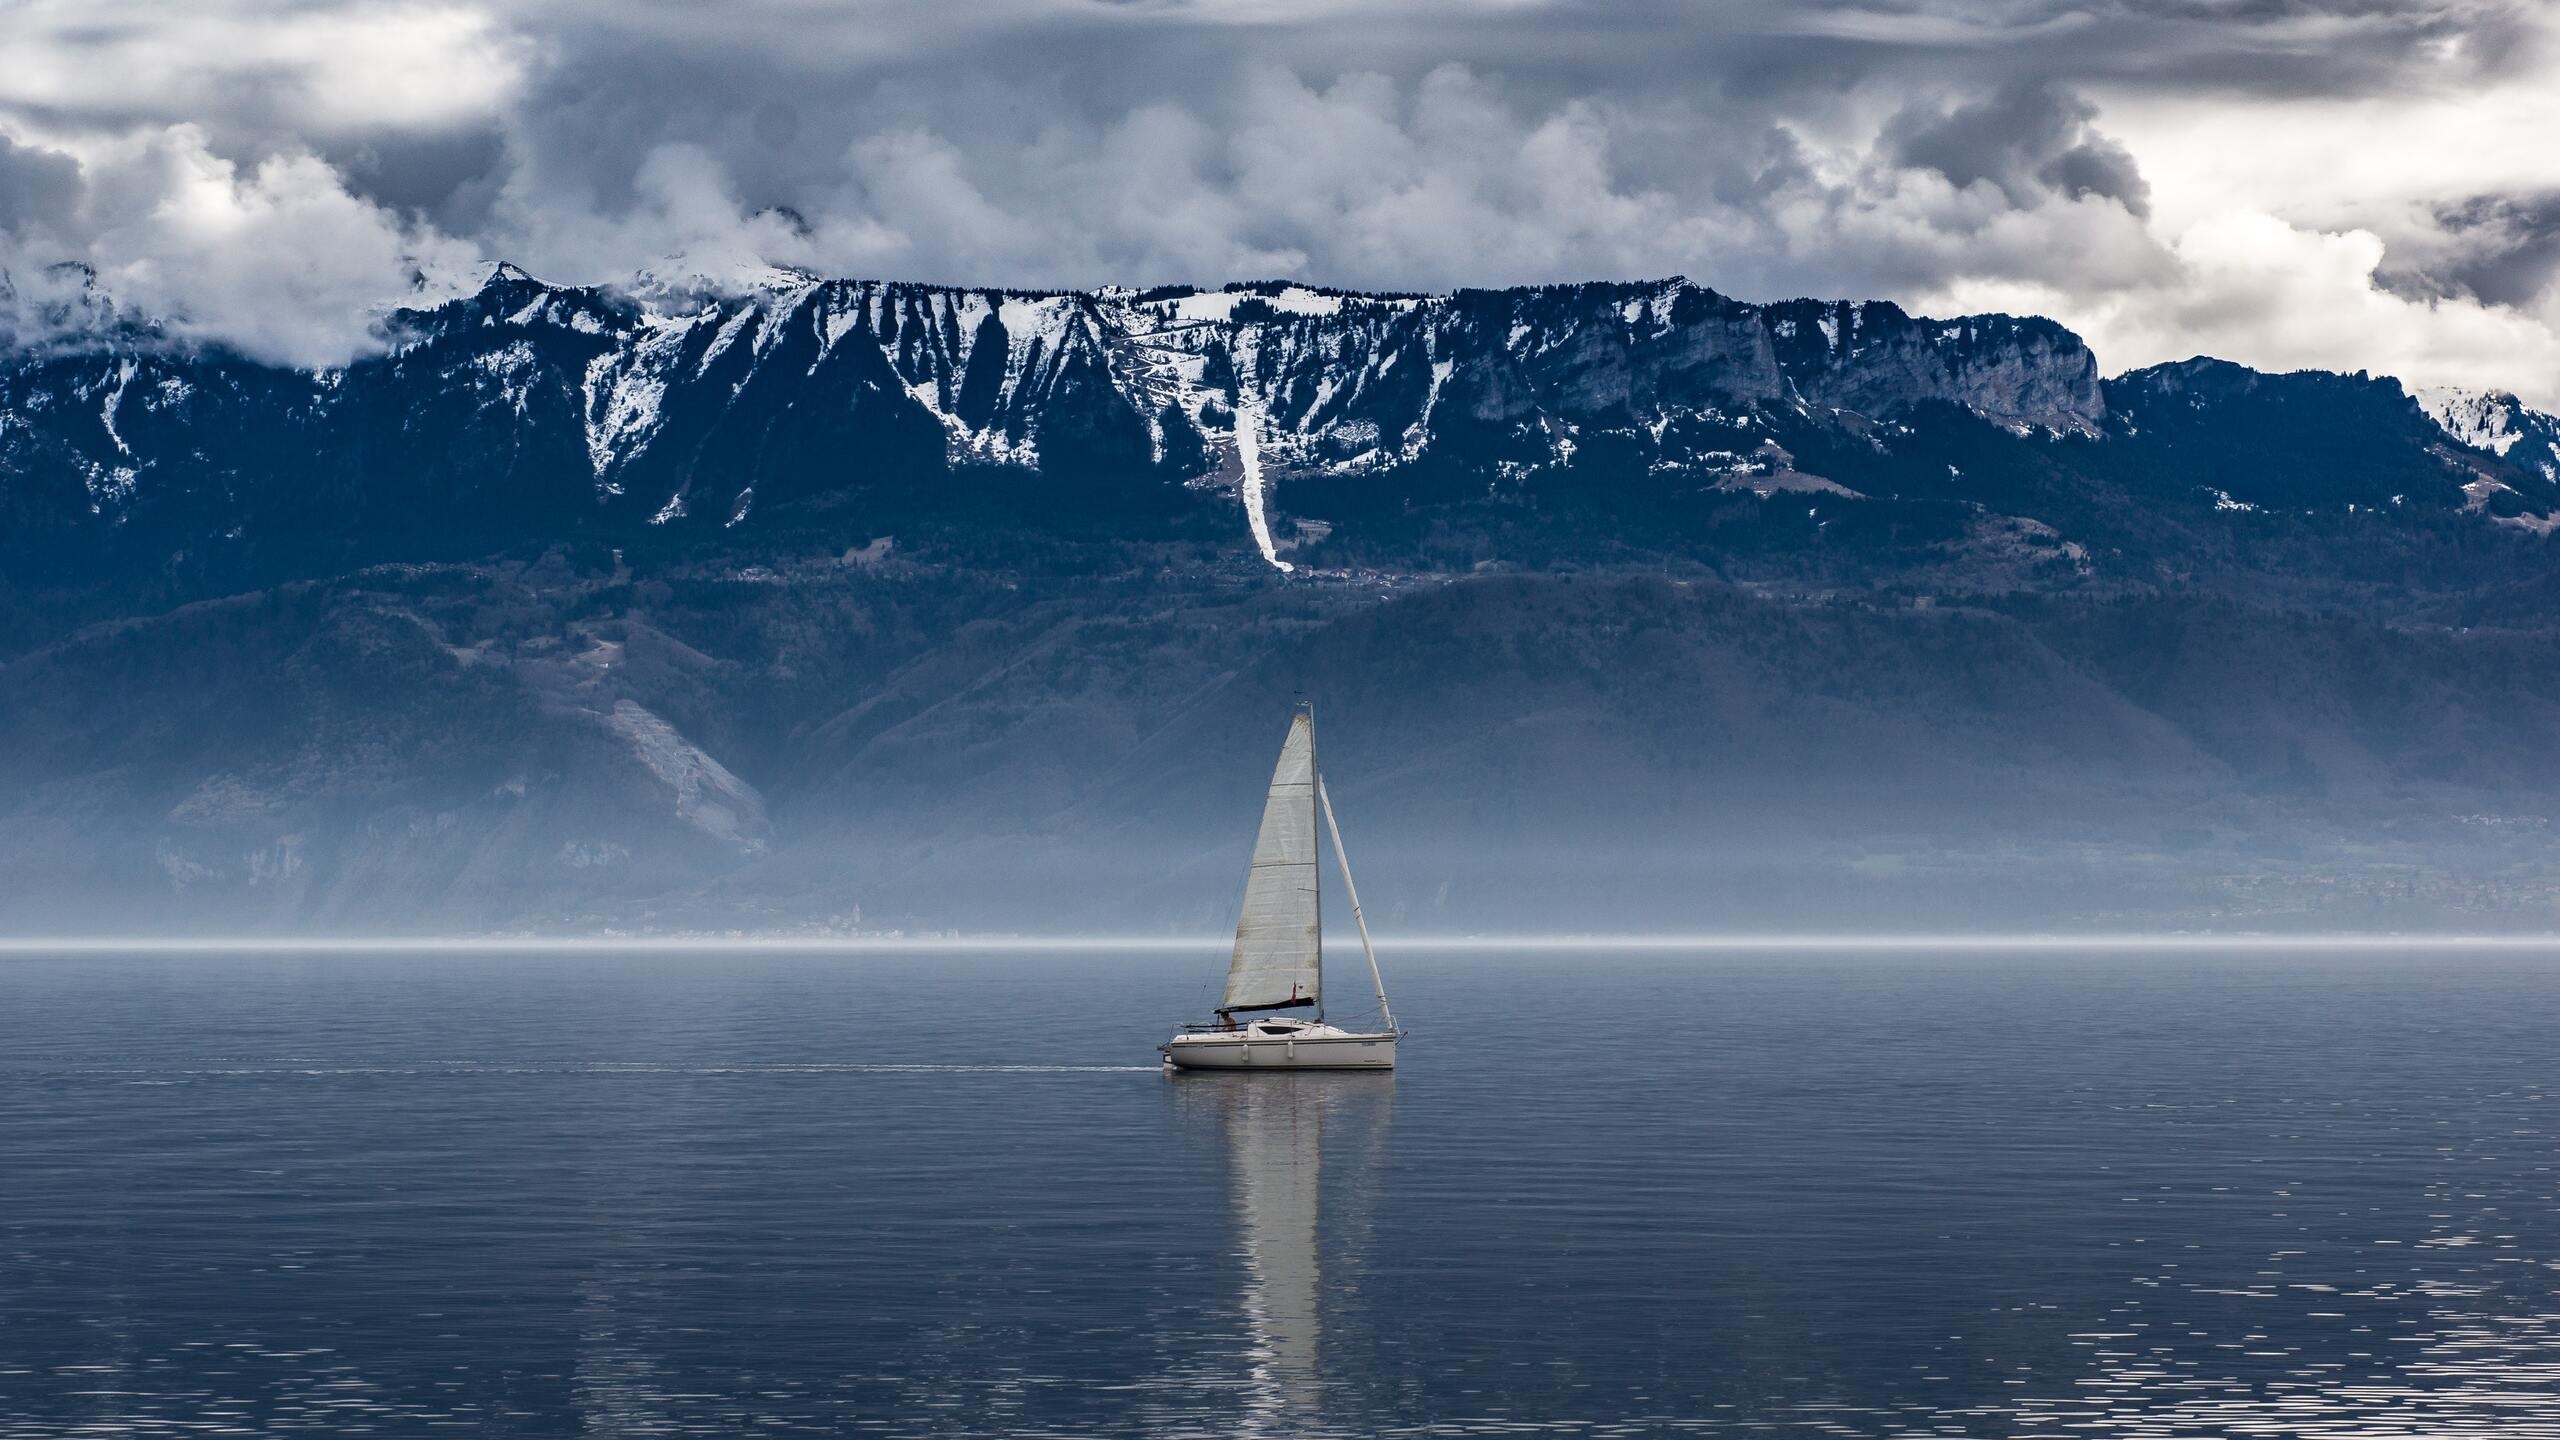 Sail Boat: A watercraft, Seascape, Recreational sailing. 2560x1440 HD Wallpaper.